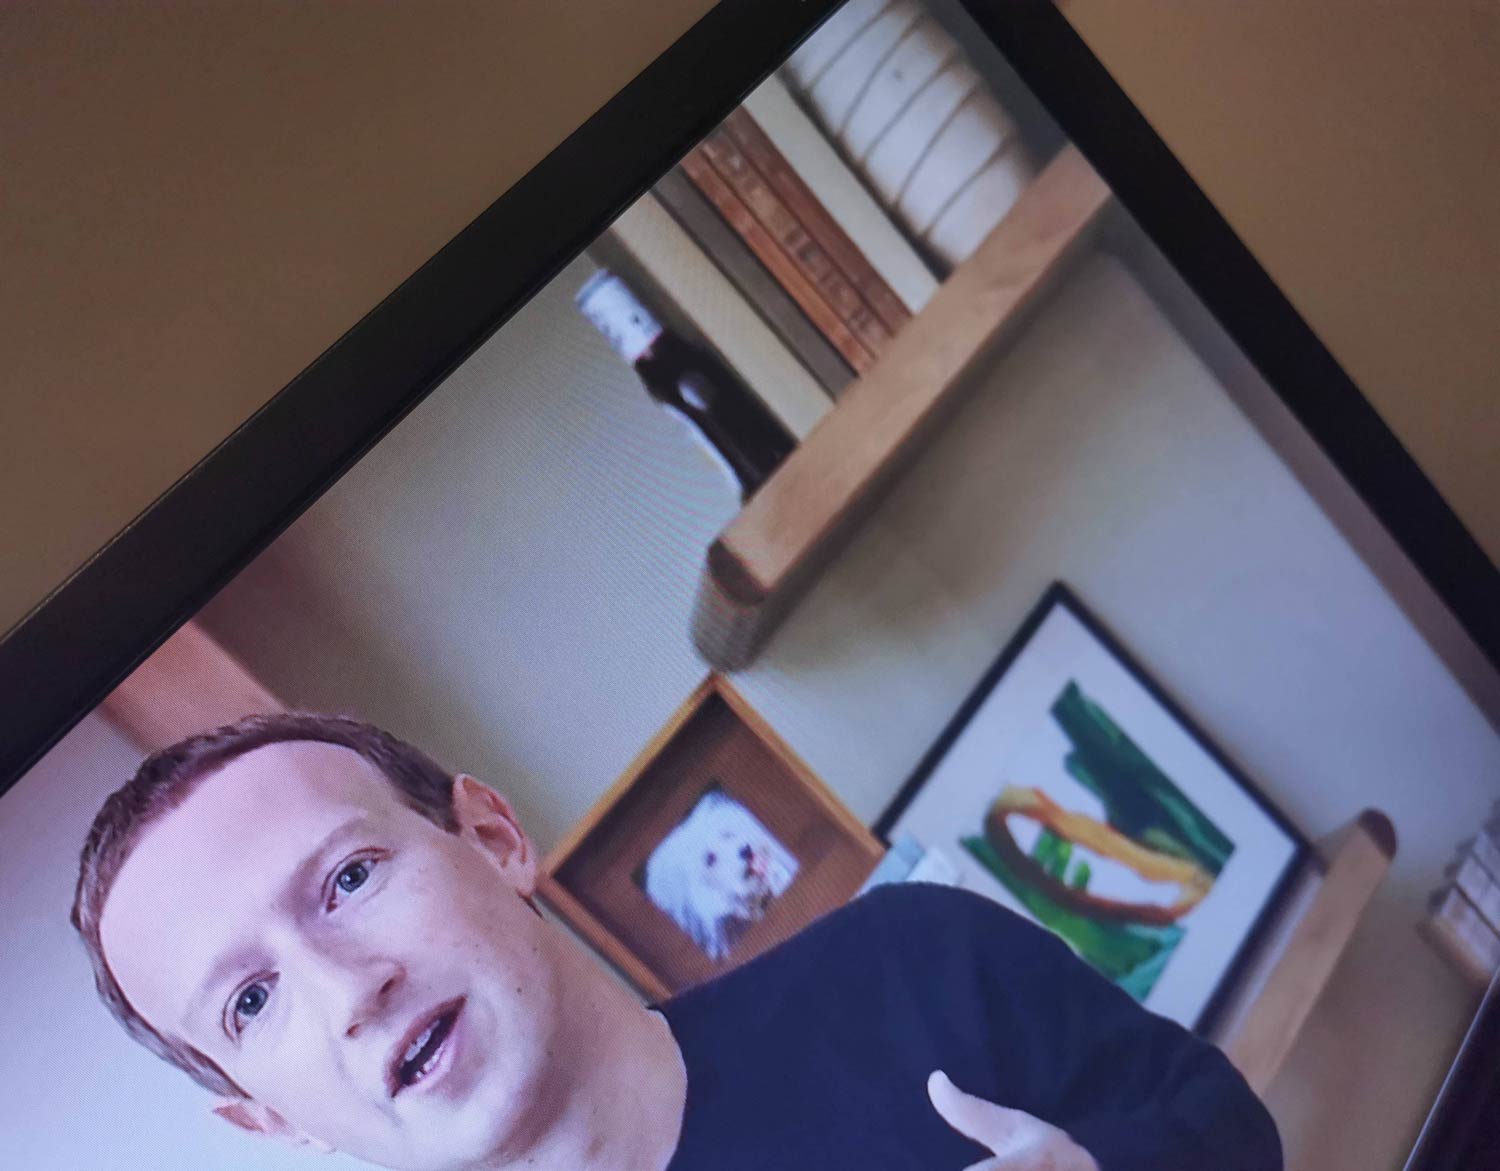 Mark Zuckerberg is using BBQ sauce as a book stopper